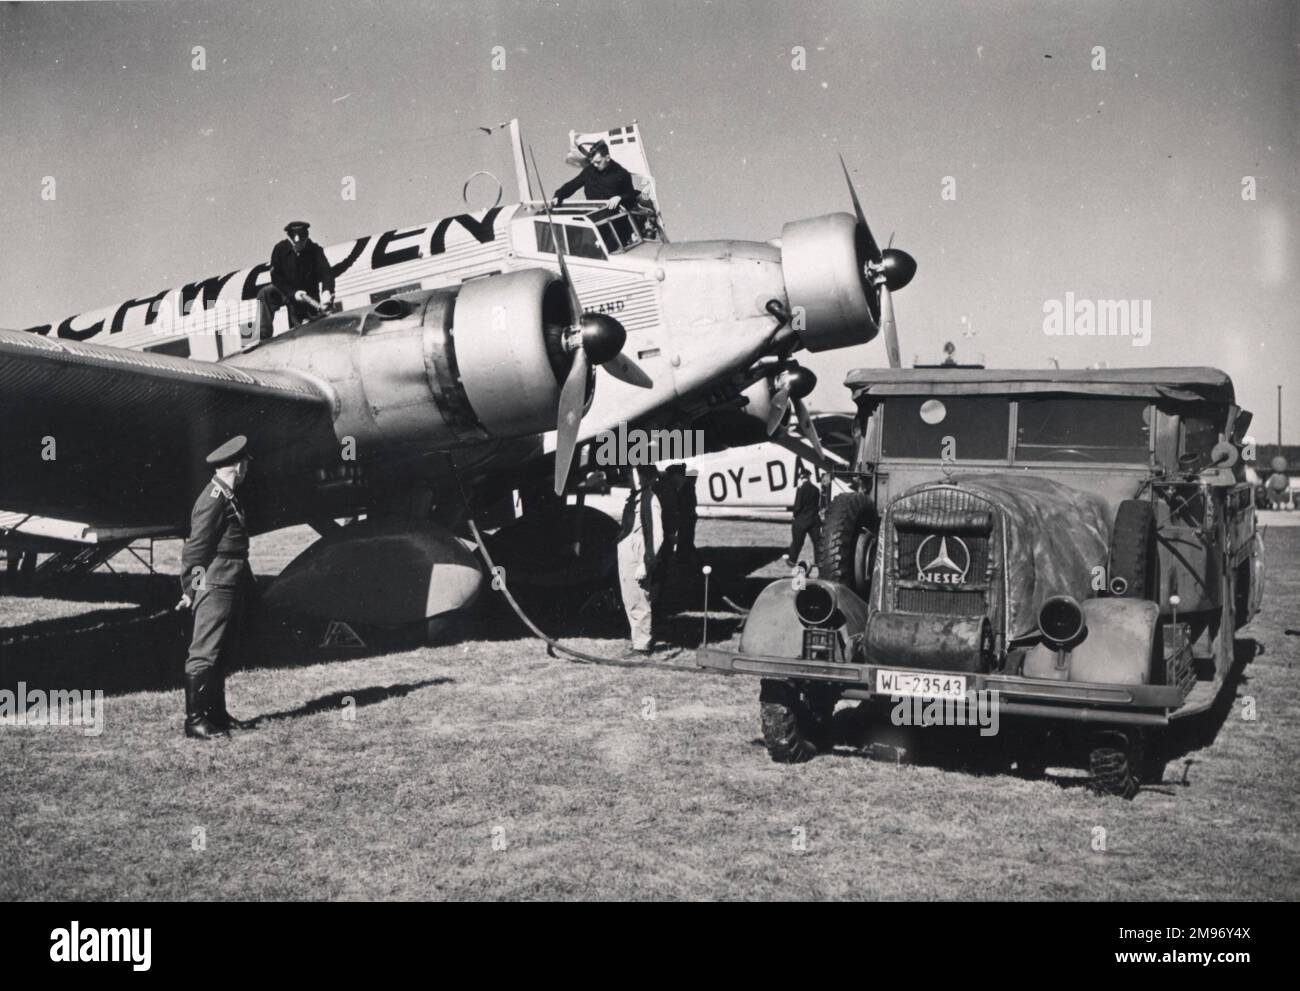 Junkers Ju52/3m. Stock Photo